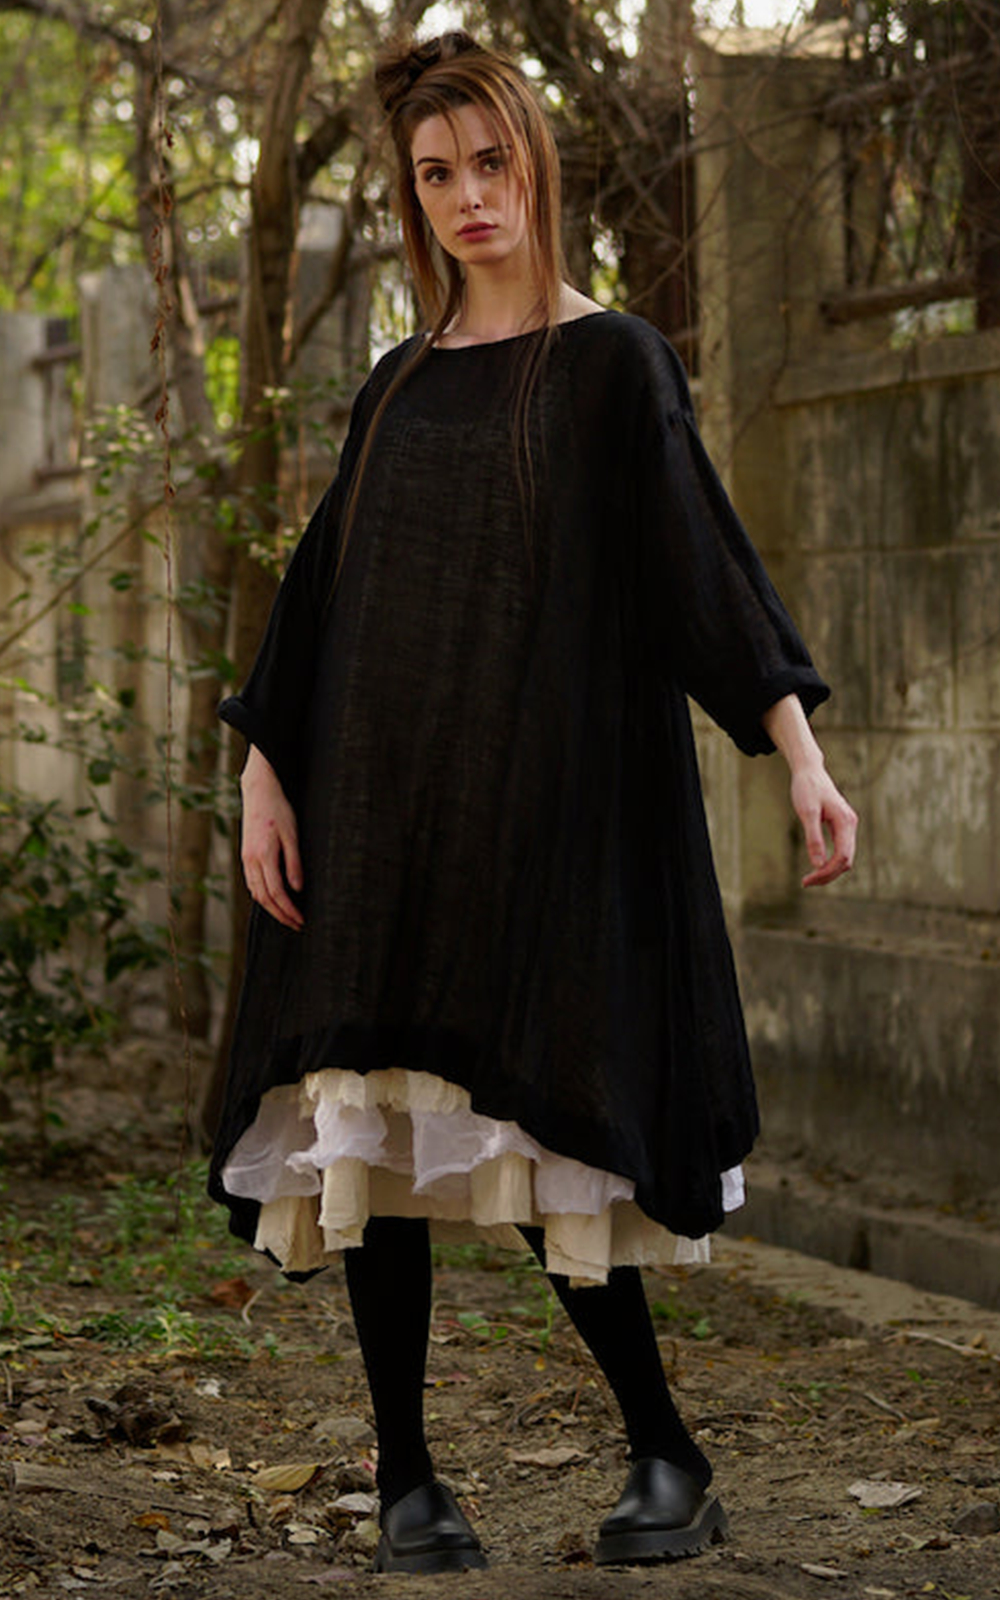 Sylvie Tunic Dress In Gauze Linen product photo.